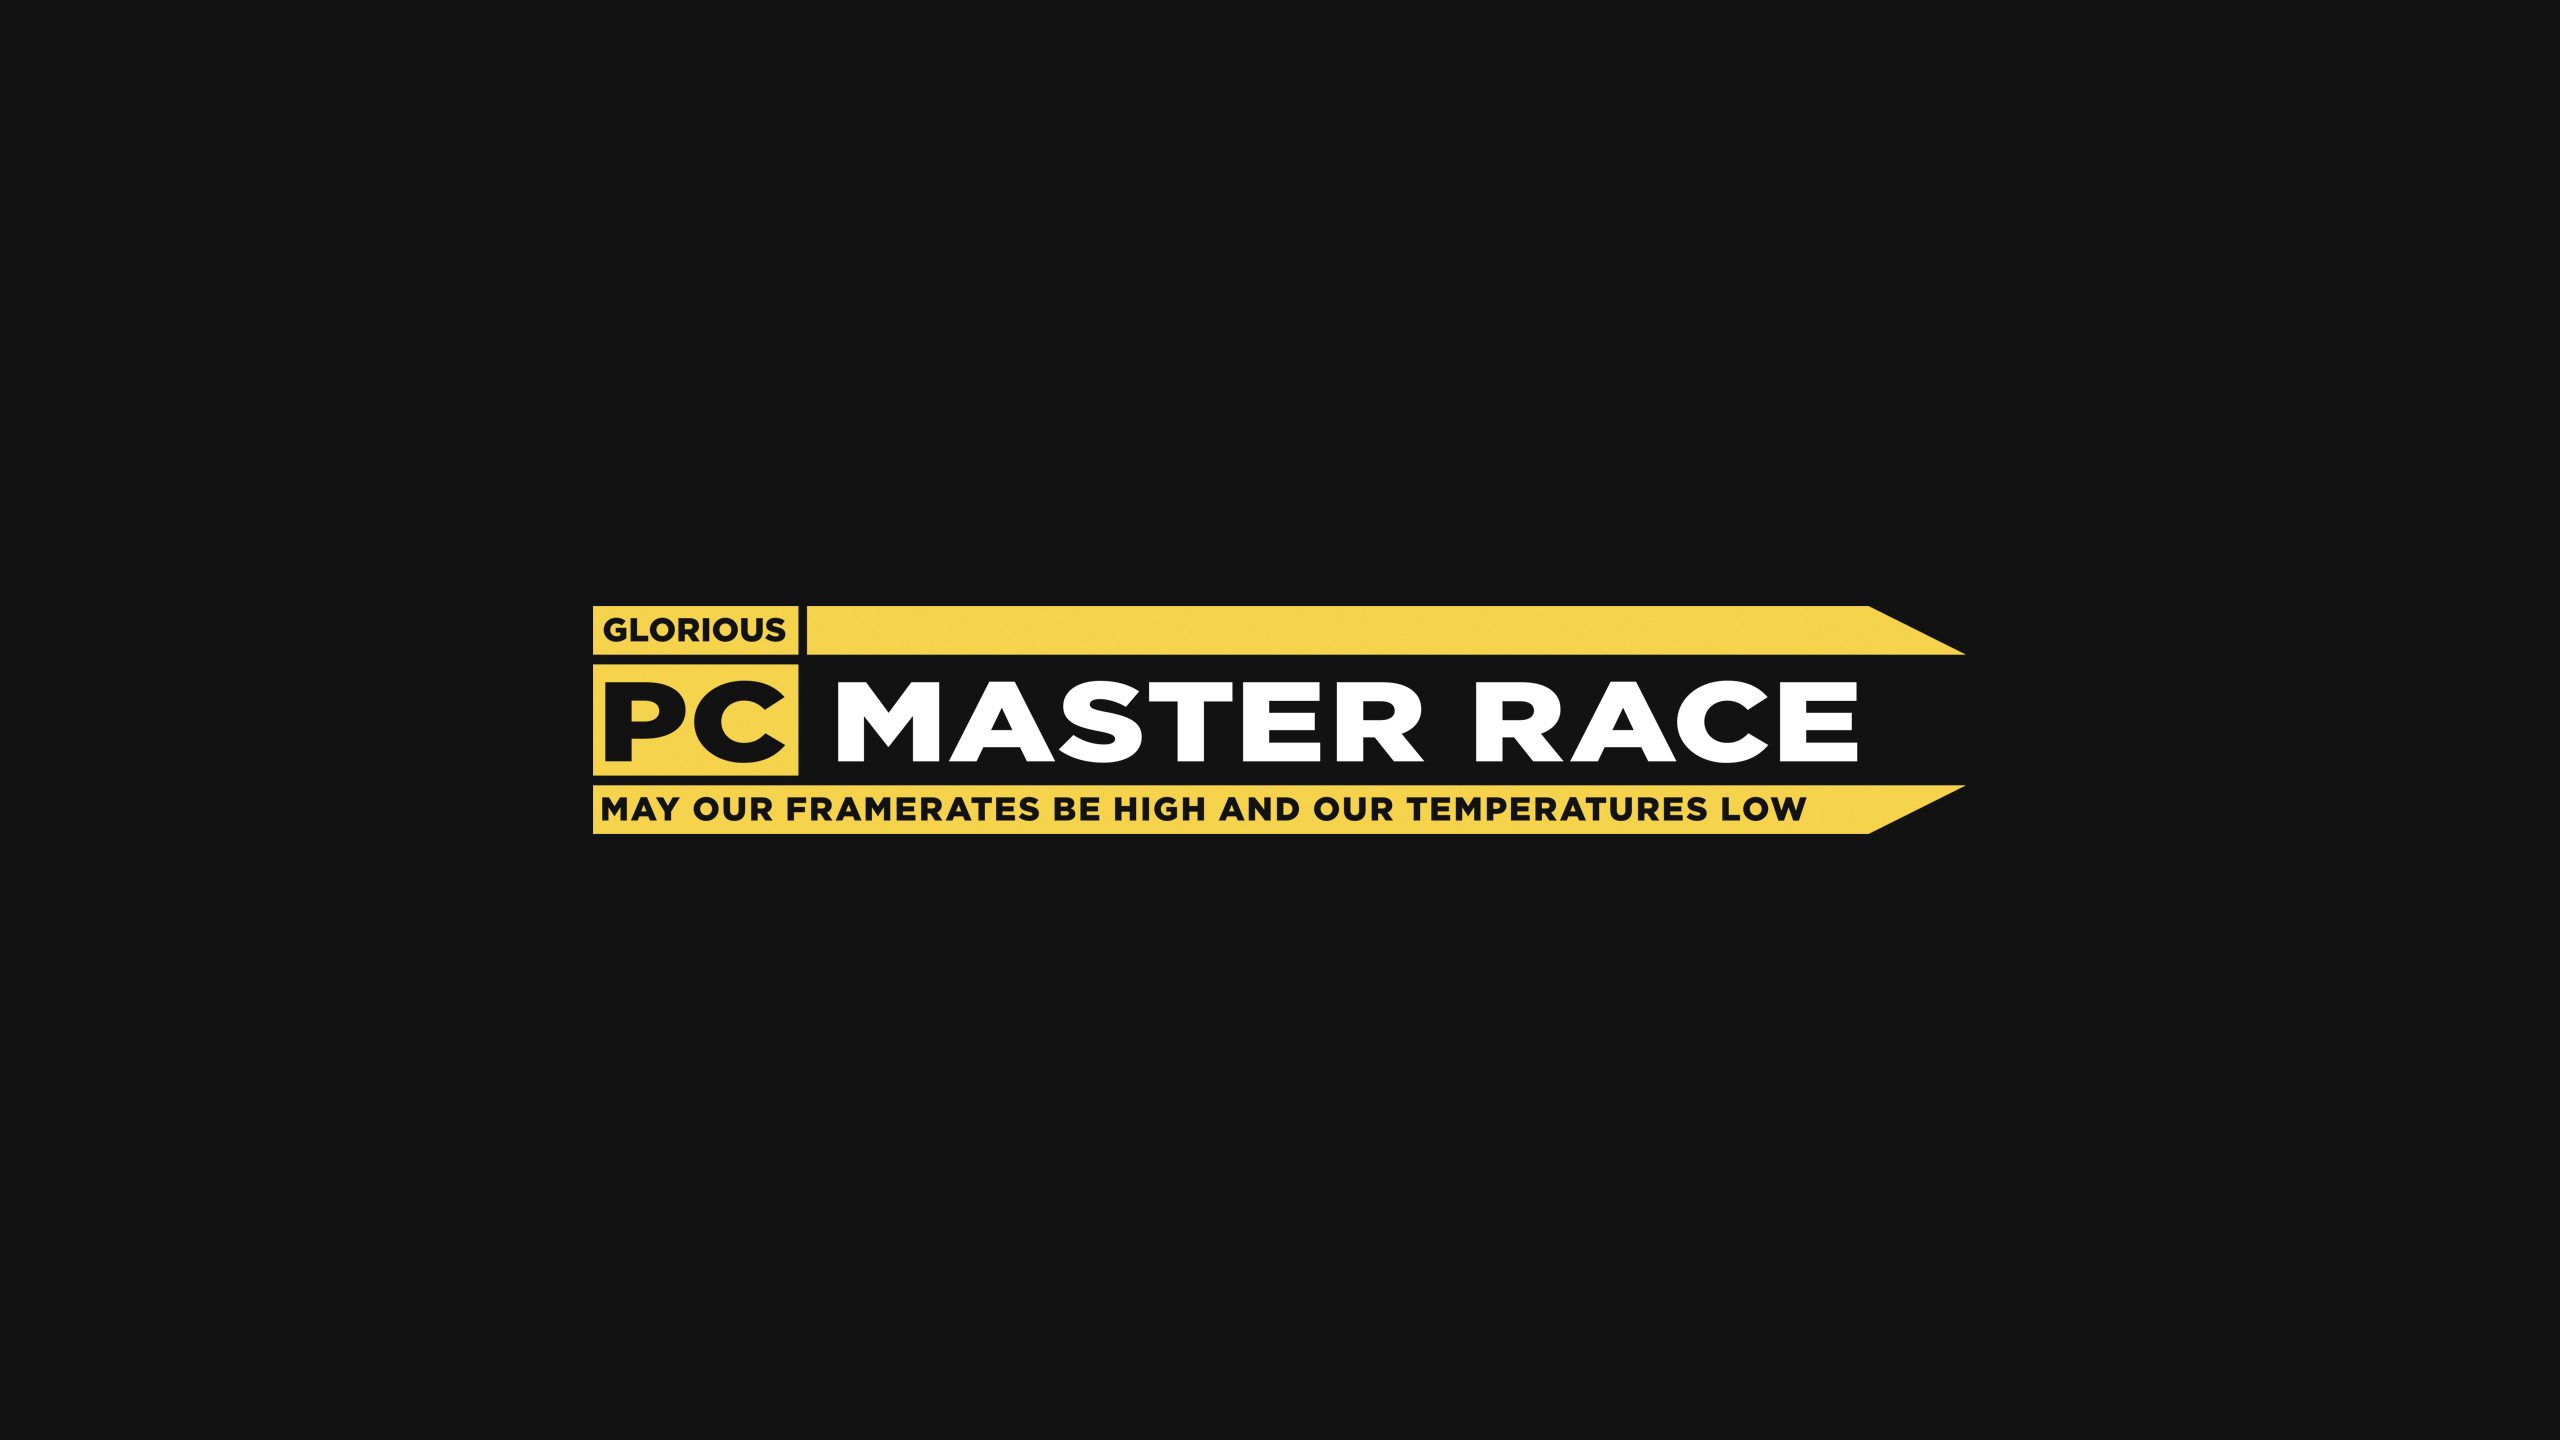 2560x1440 PC Master Race Logos? : r/pcmasterrace